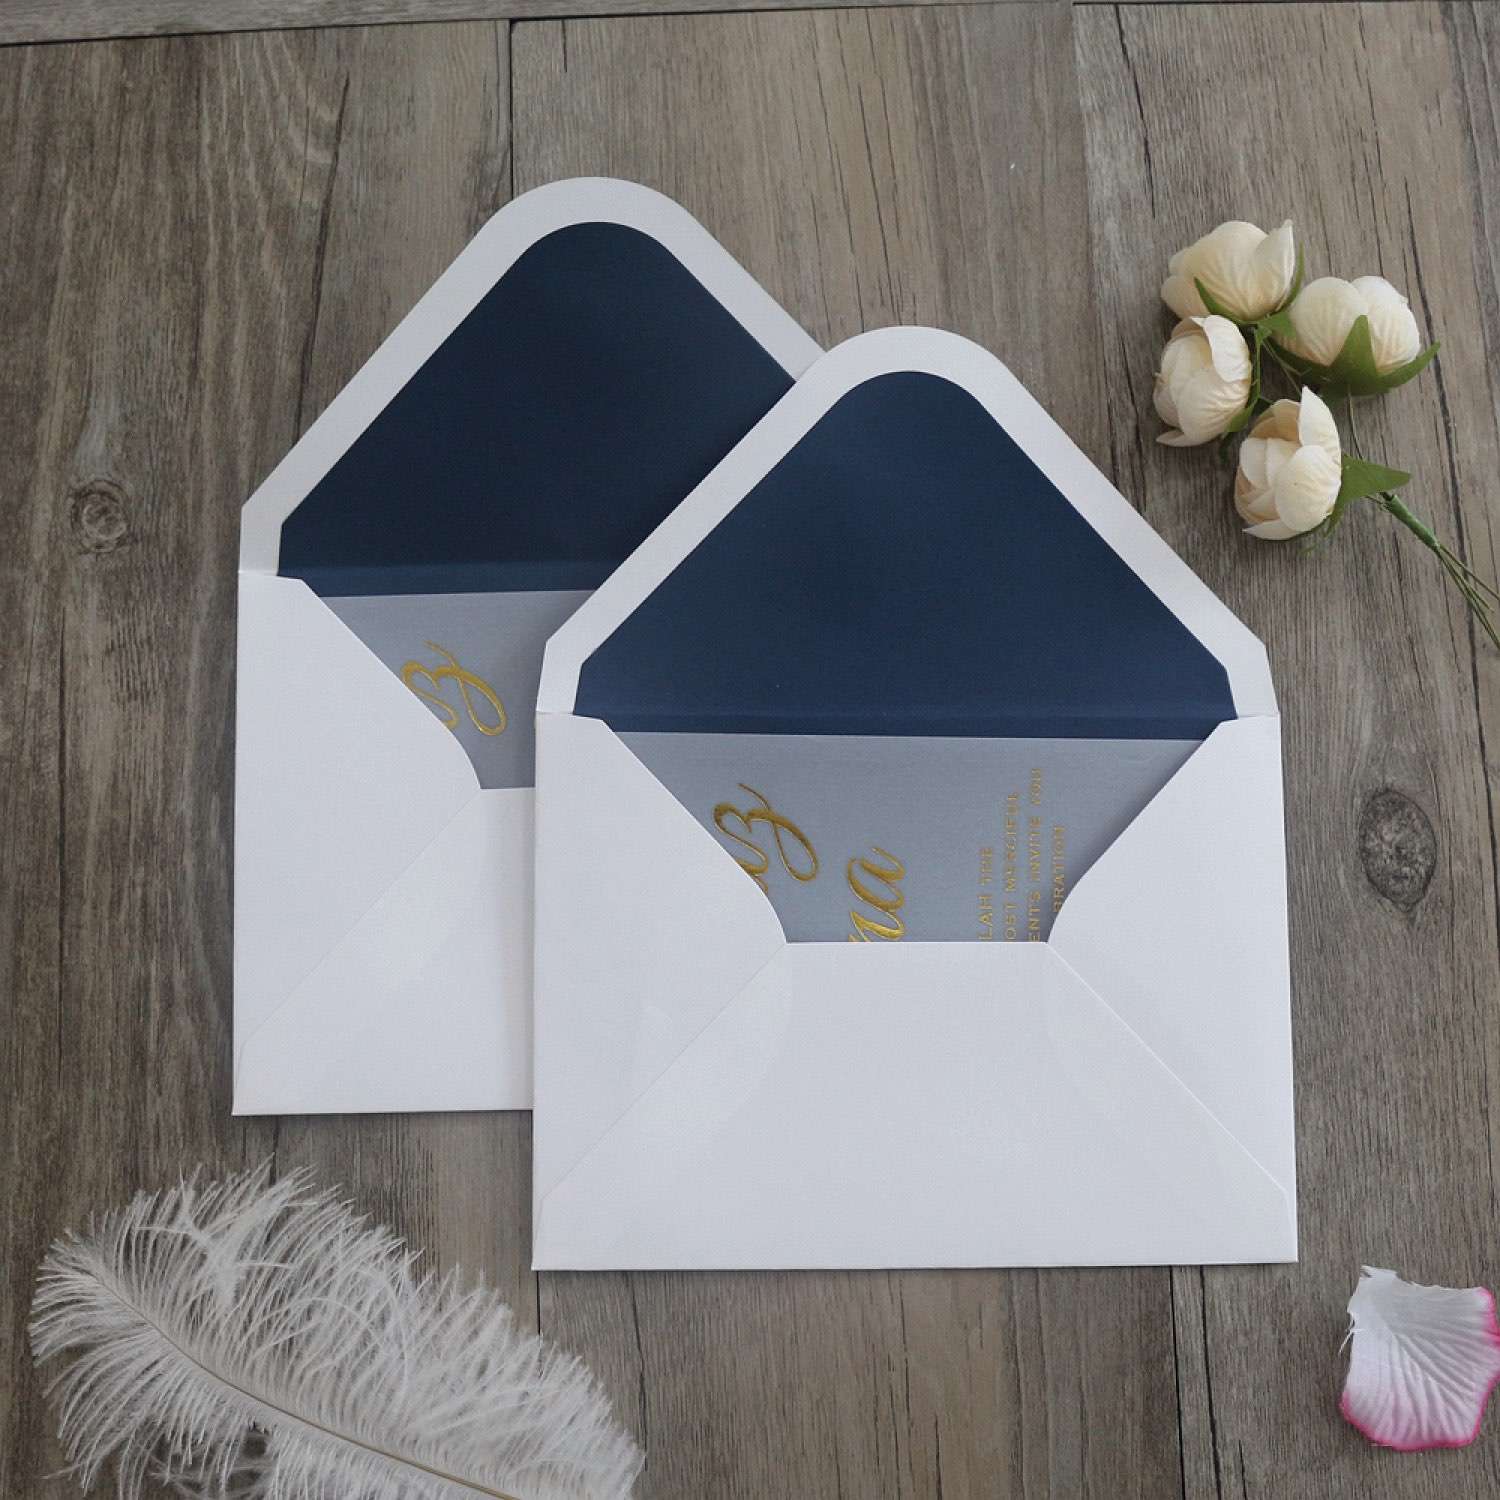 Vellum Paper Wedding Celebration Invitation Card Foil Printing 